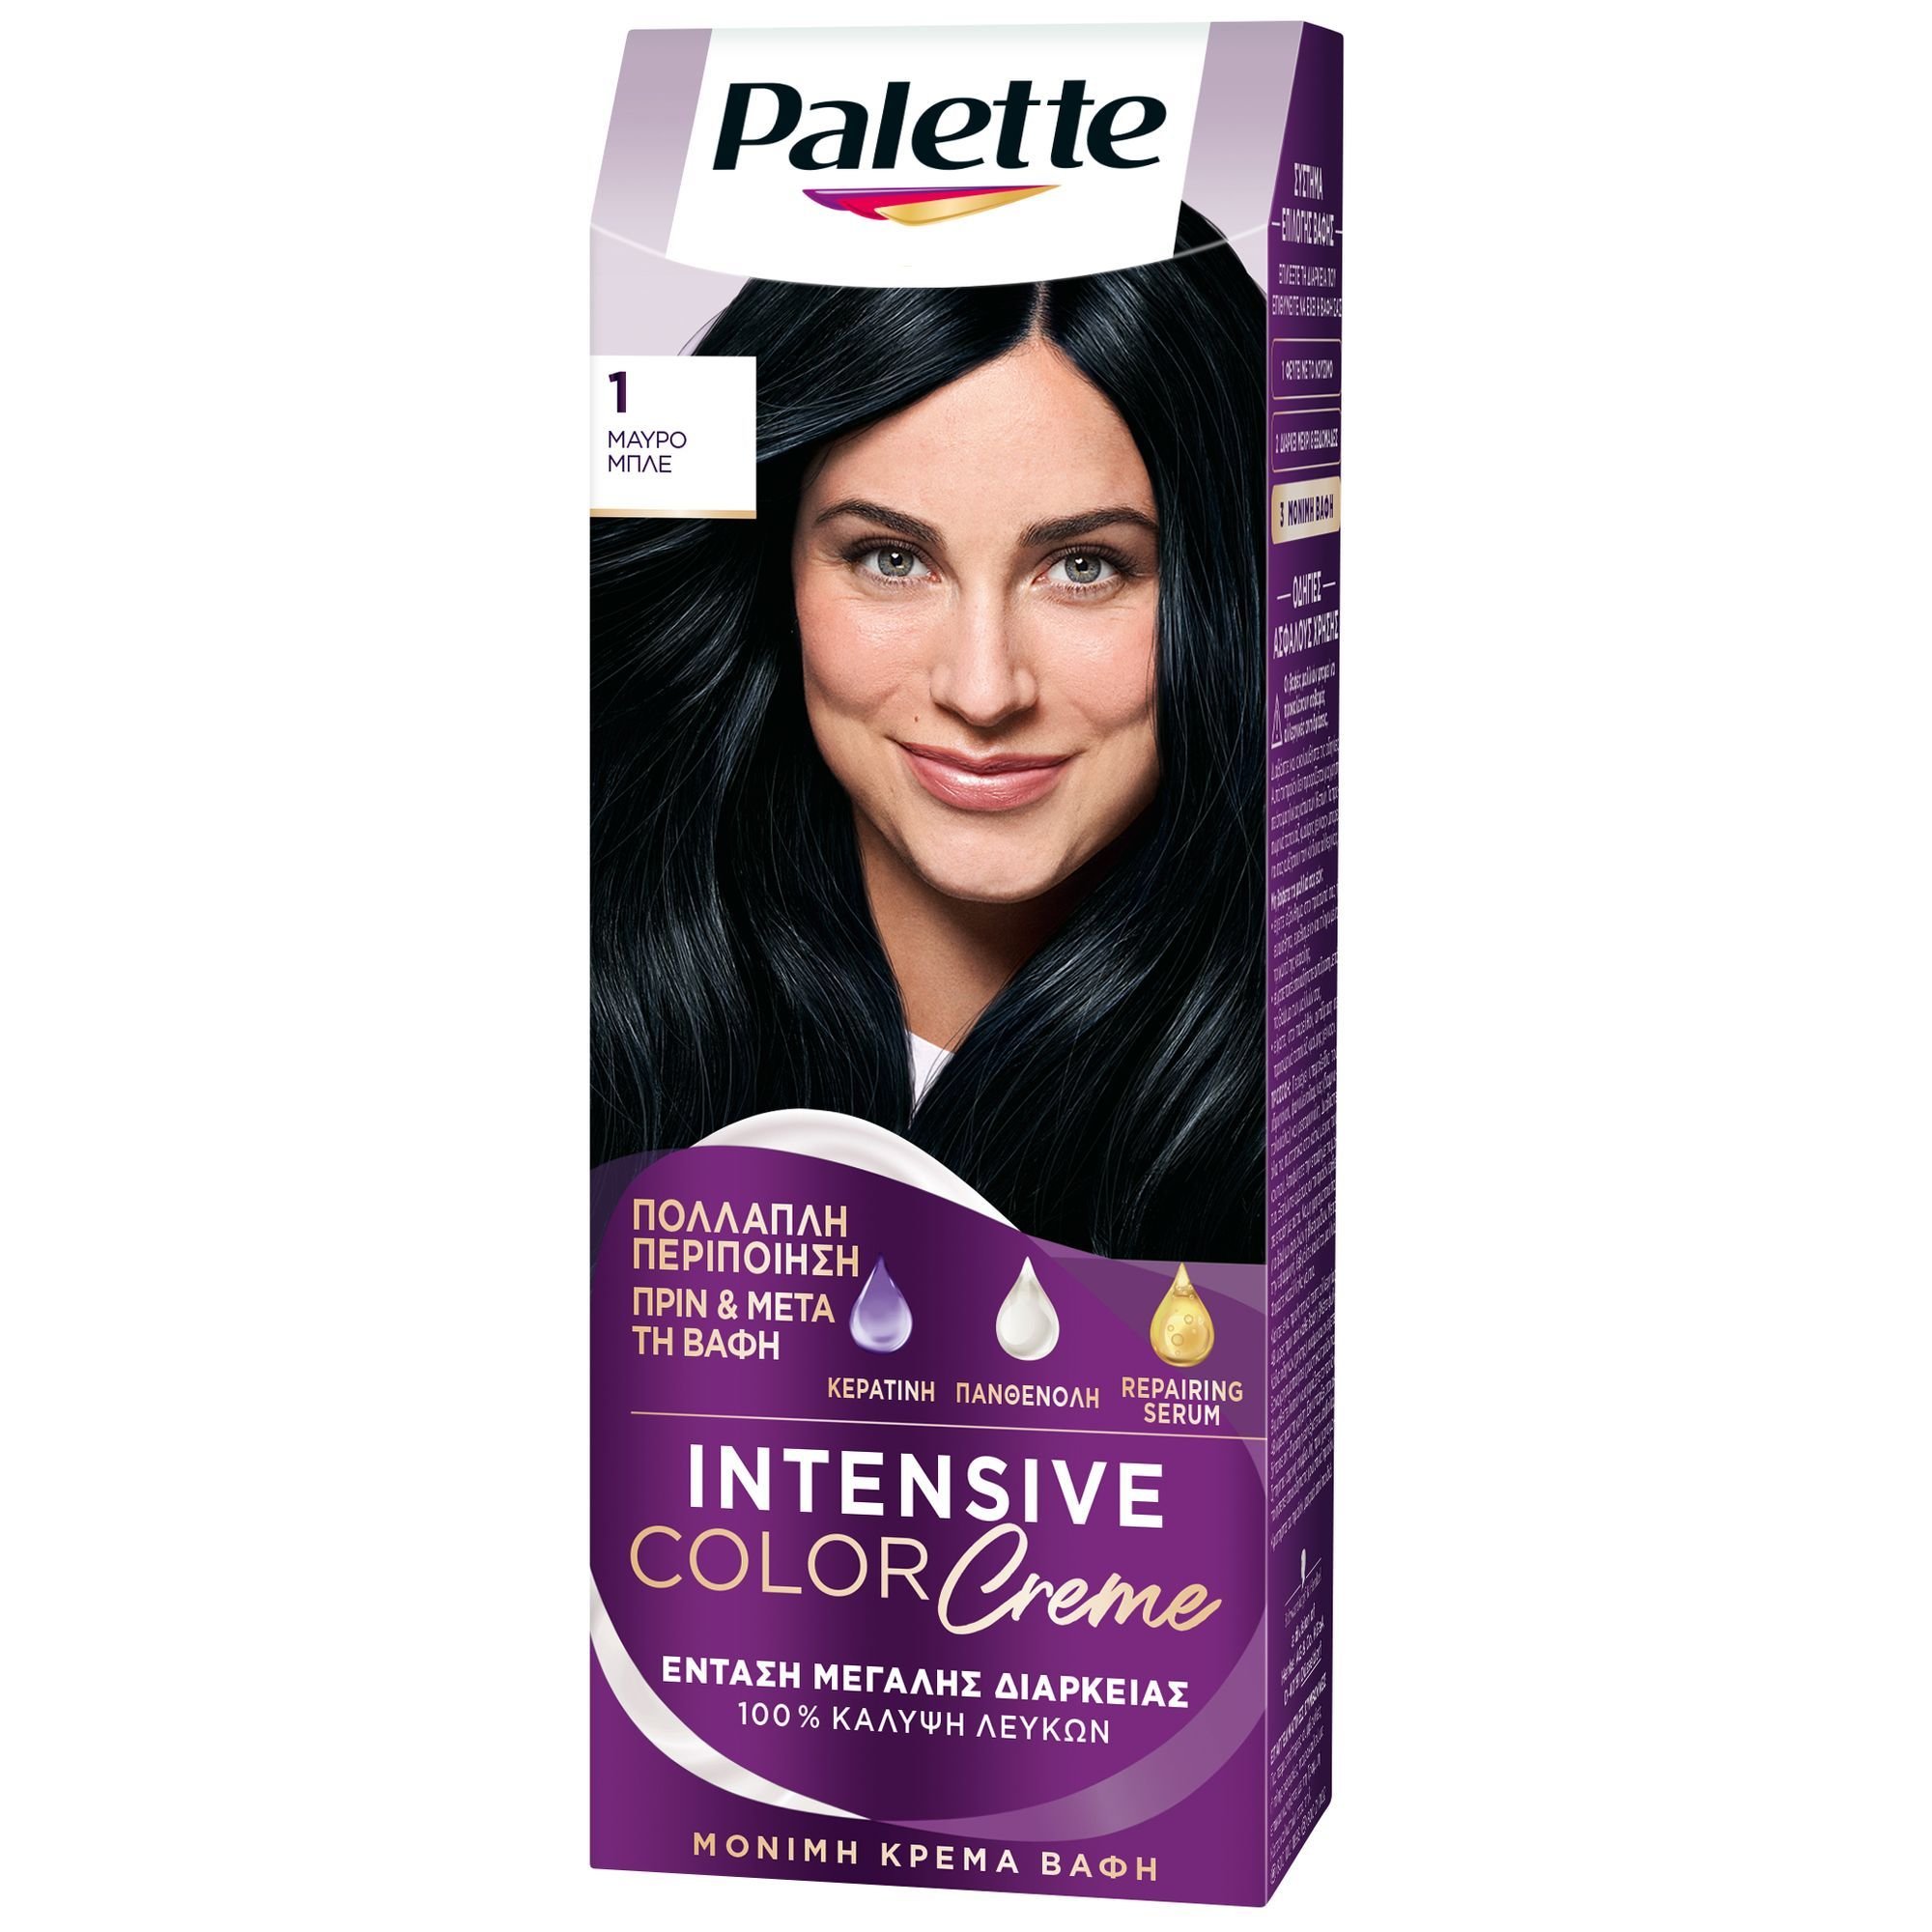 Schwarzkopf Palette Intensive Hair Color Creme Kit Μόνιμη Κρέμα Βαφή Μαλλιών για Έντονο Χρώμα Μεγάλης Διάρκειας & Περιποίηση 1 Τεμάχιο – 1 Μαύρο Μπλε